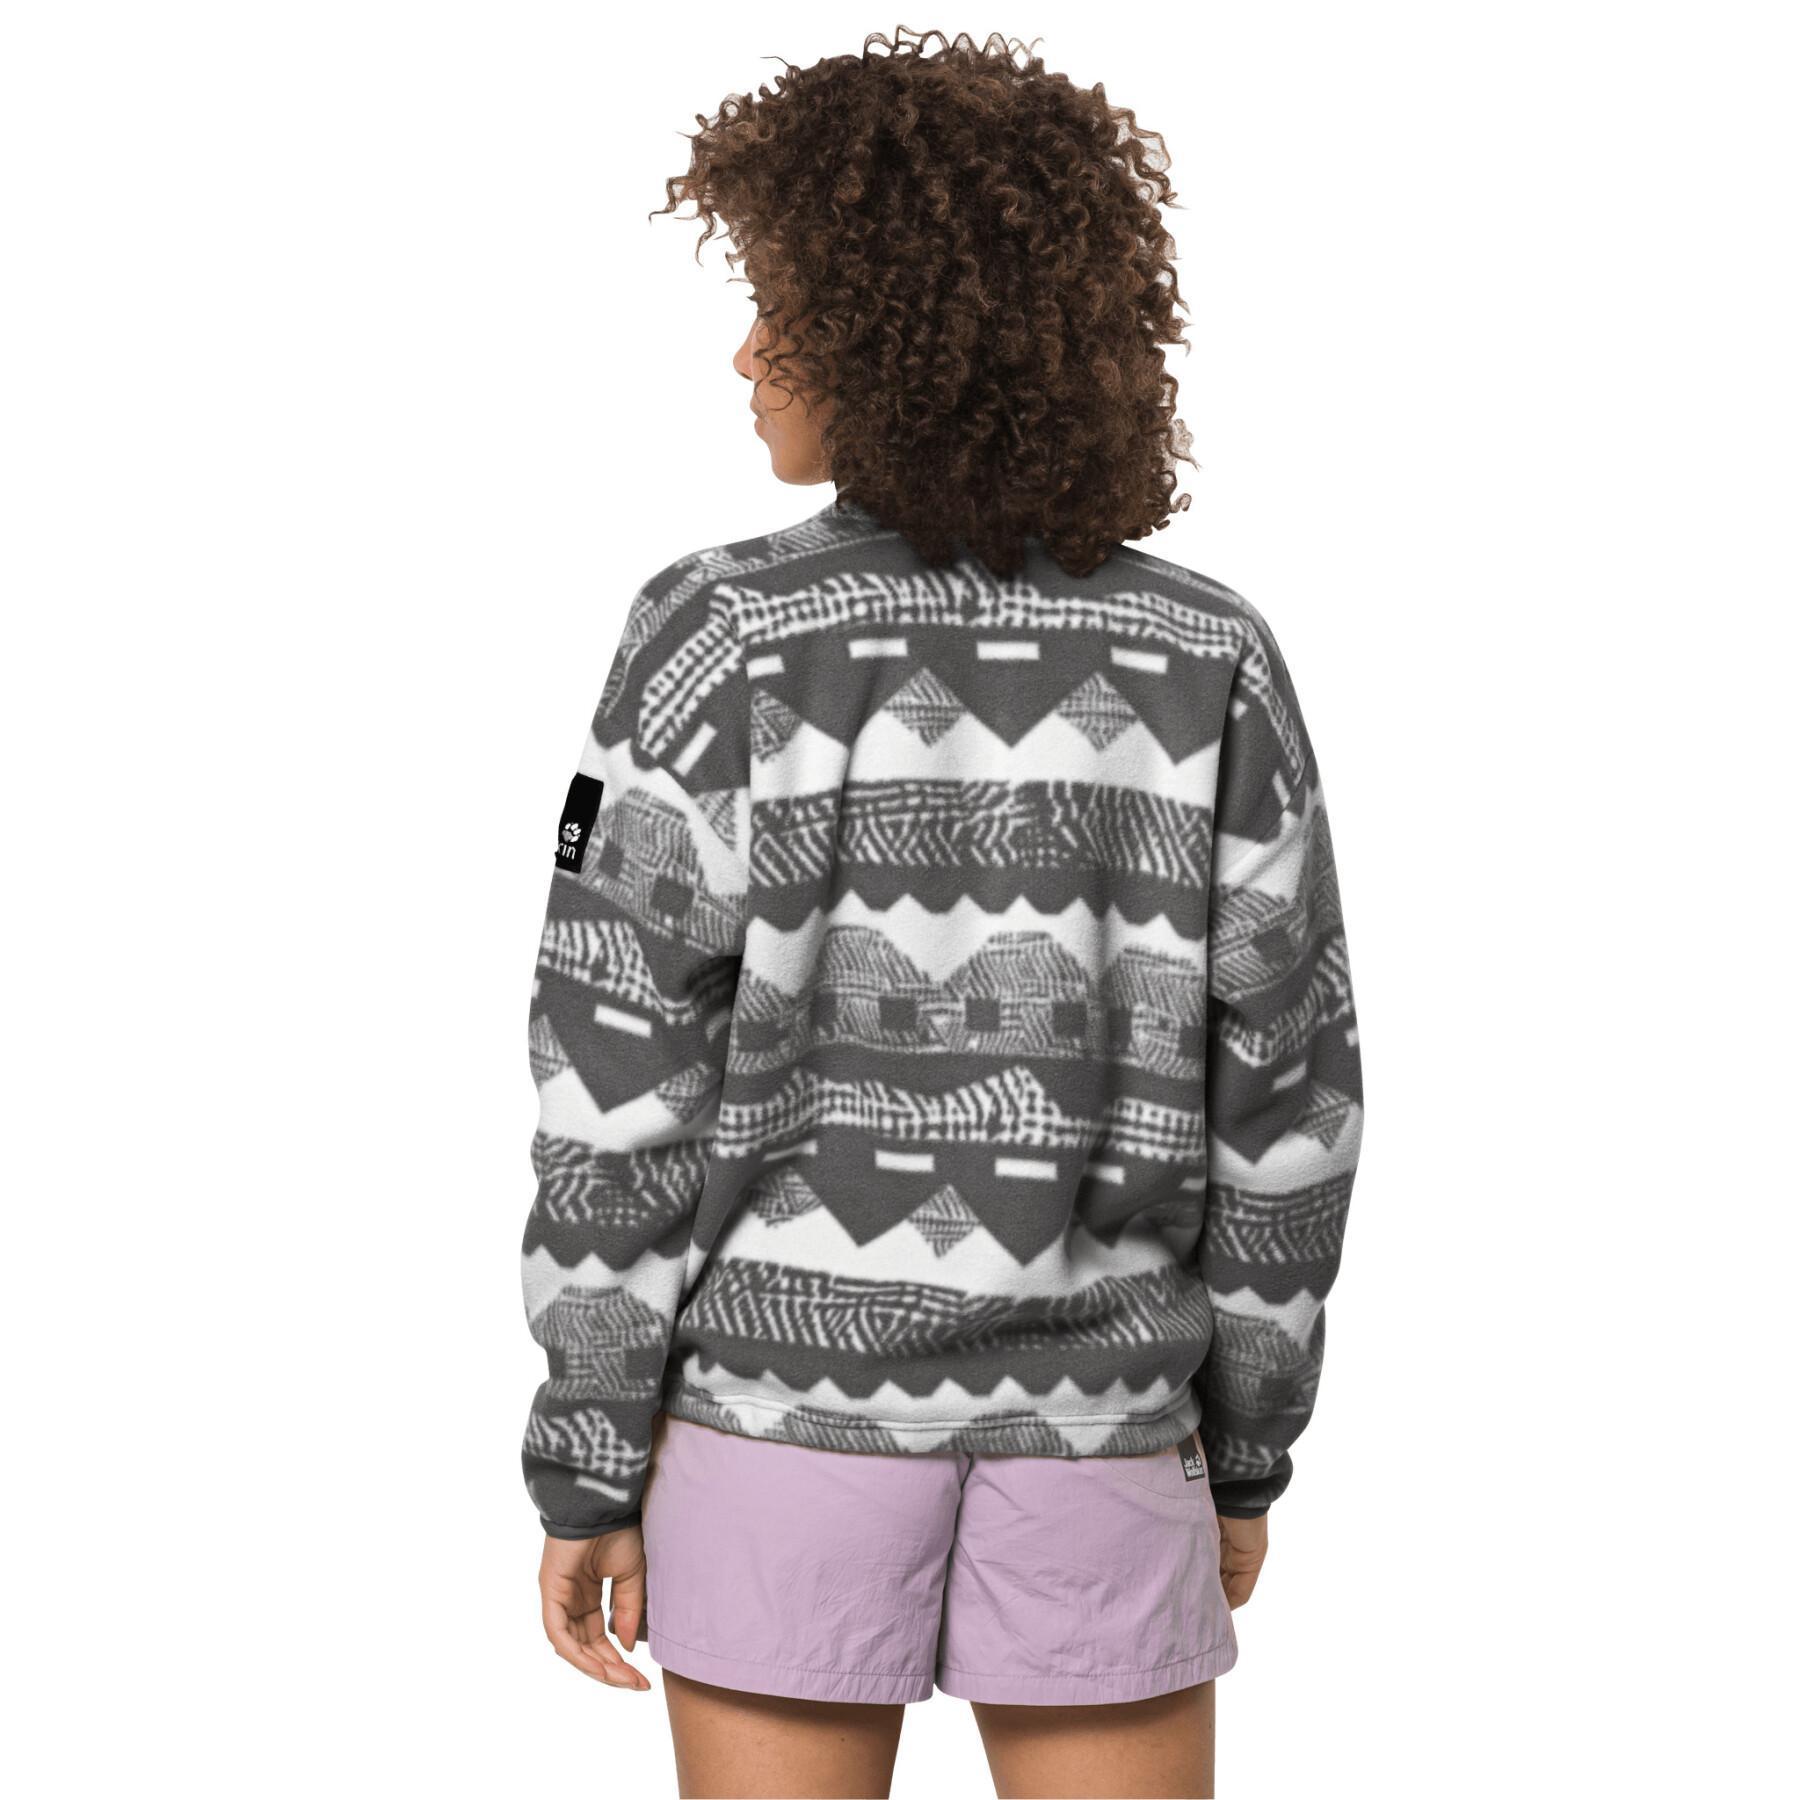 Women's printed sweater Jack Wolfskin 365 Rebel